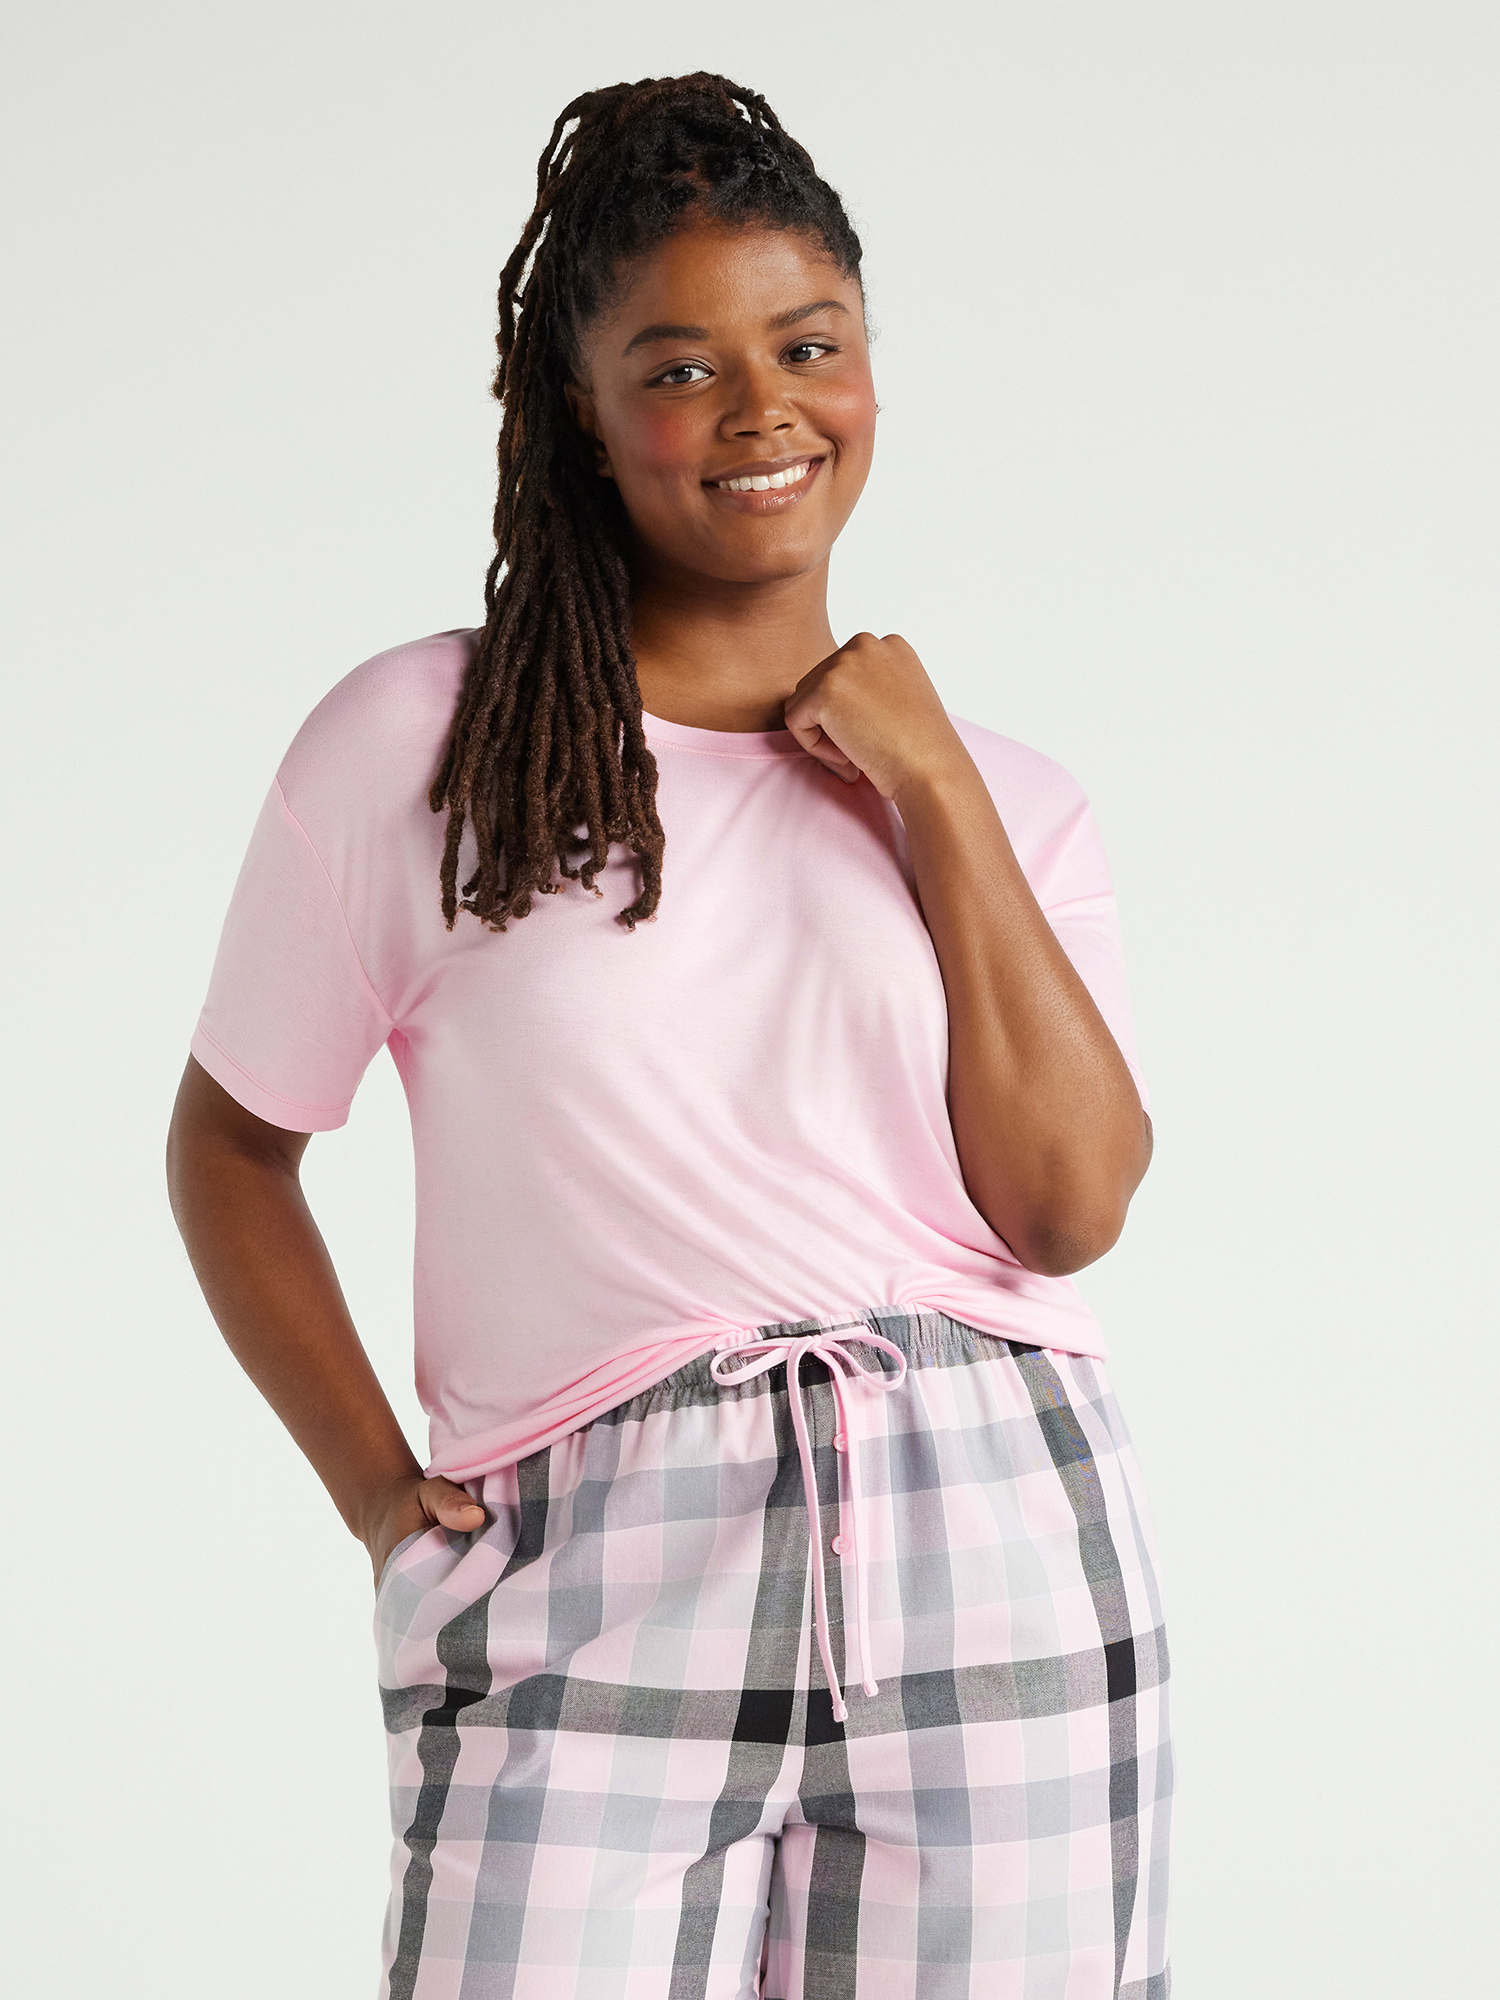 Joyspun Women's Knit Cropped Sleep Pants, Sizes S to 3X